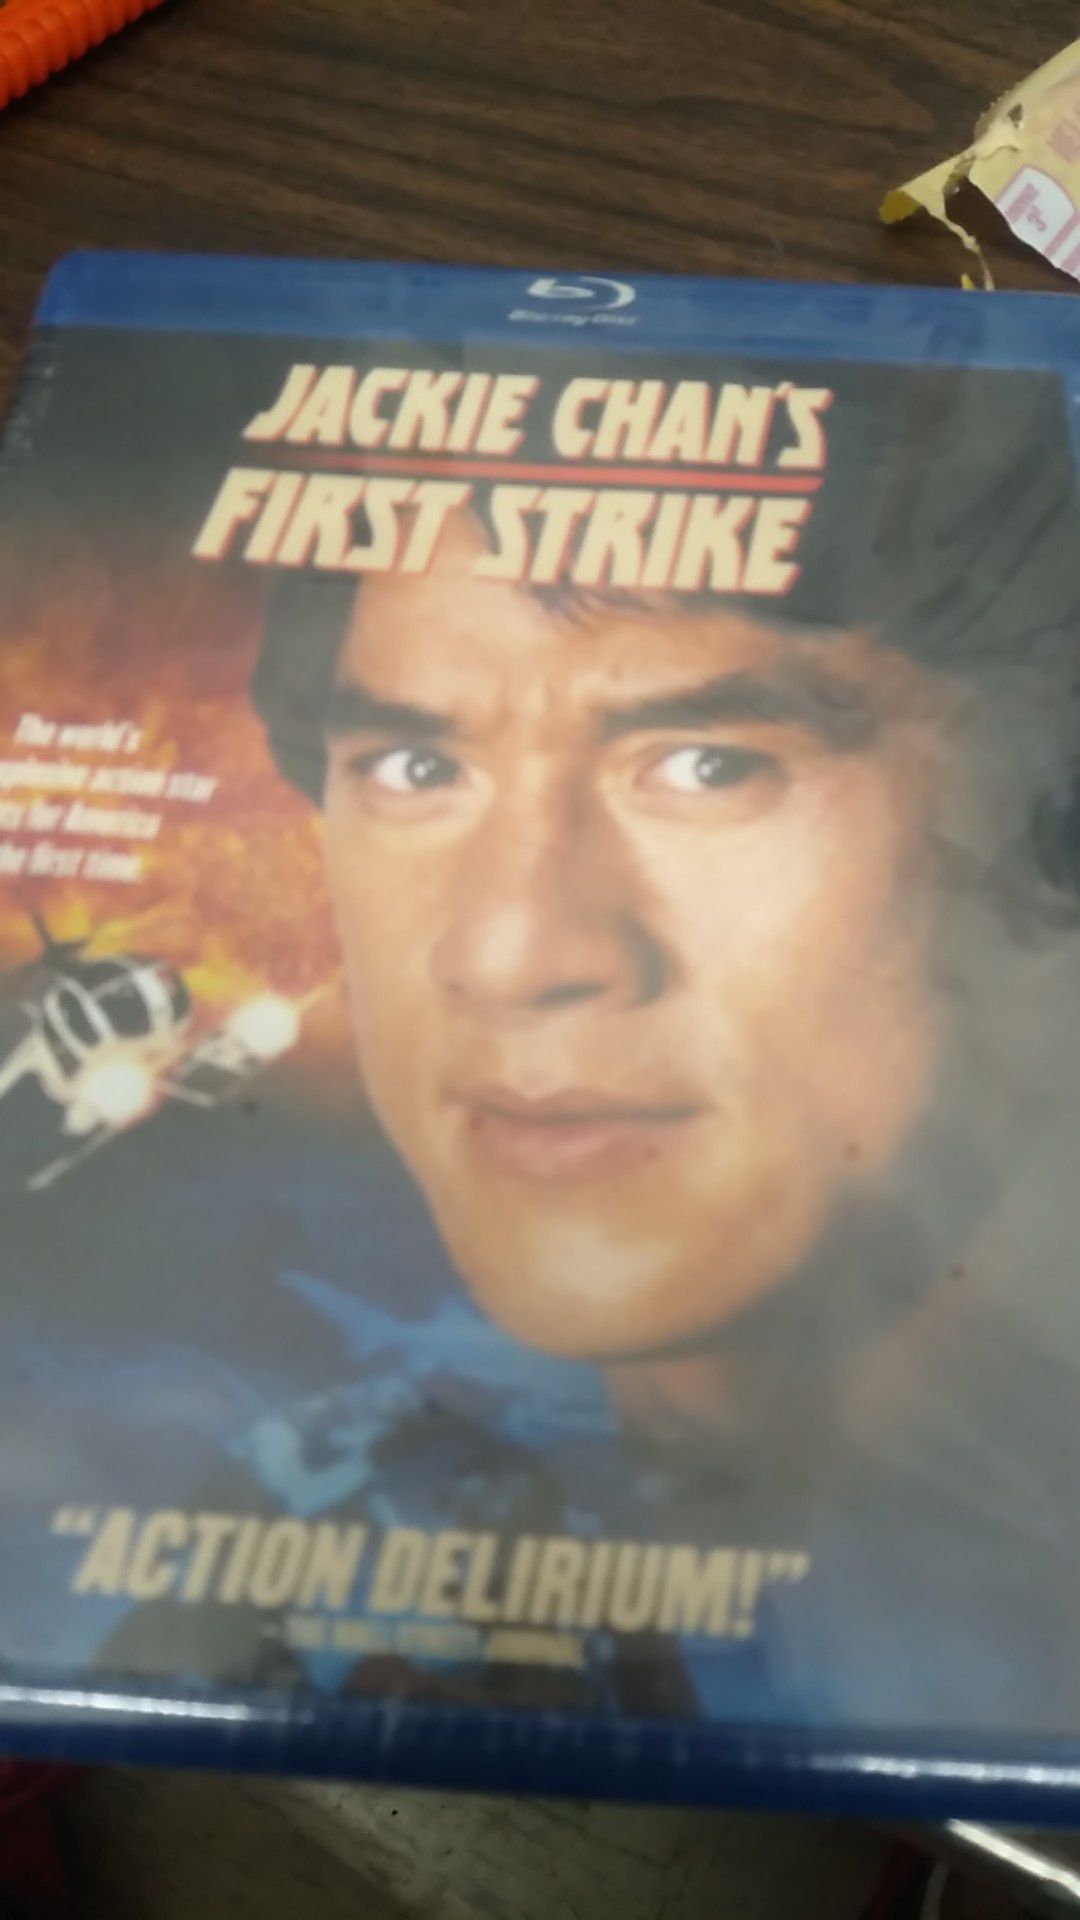 Blu-ray DVD Jackie Chan's first strike